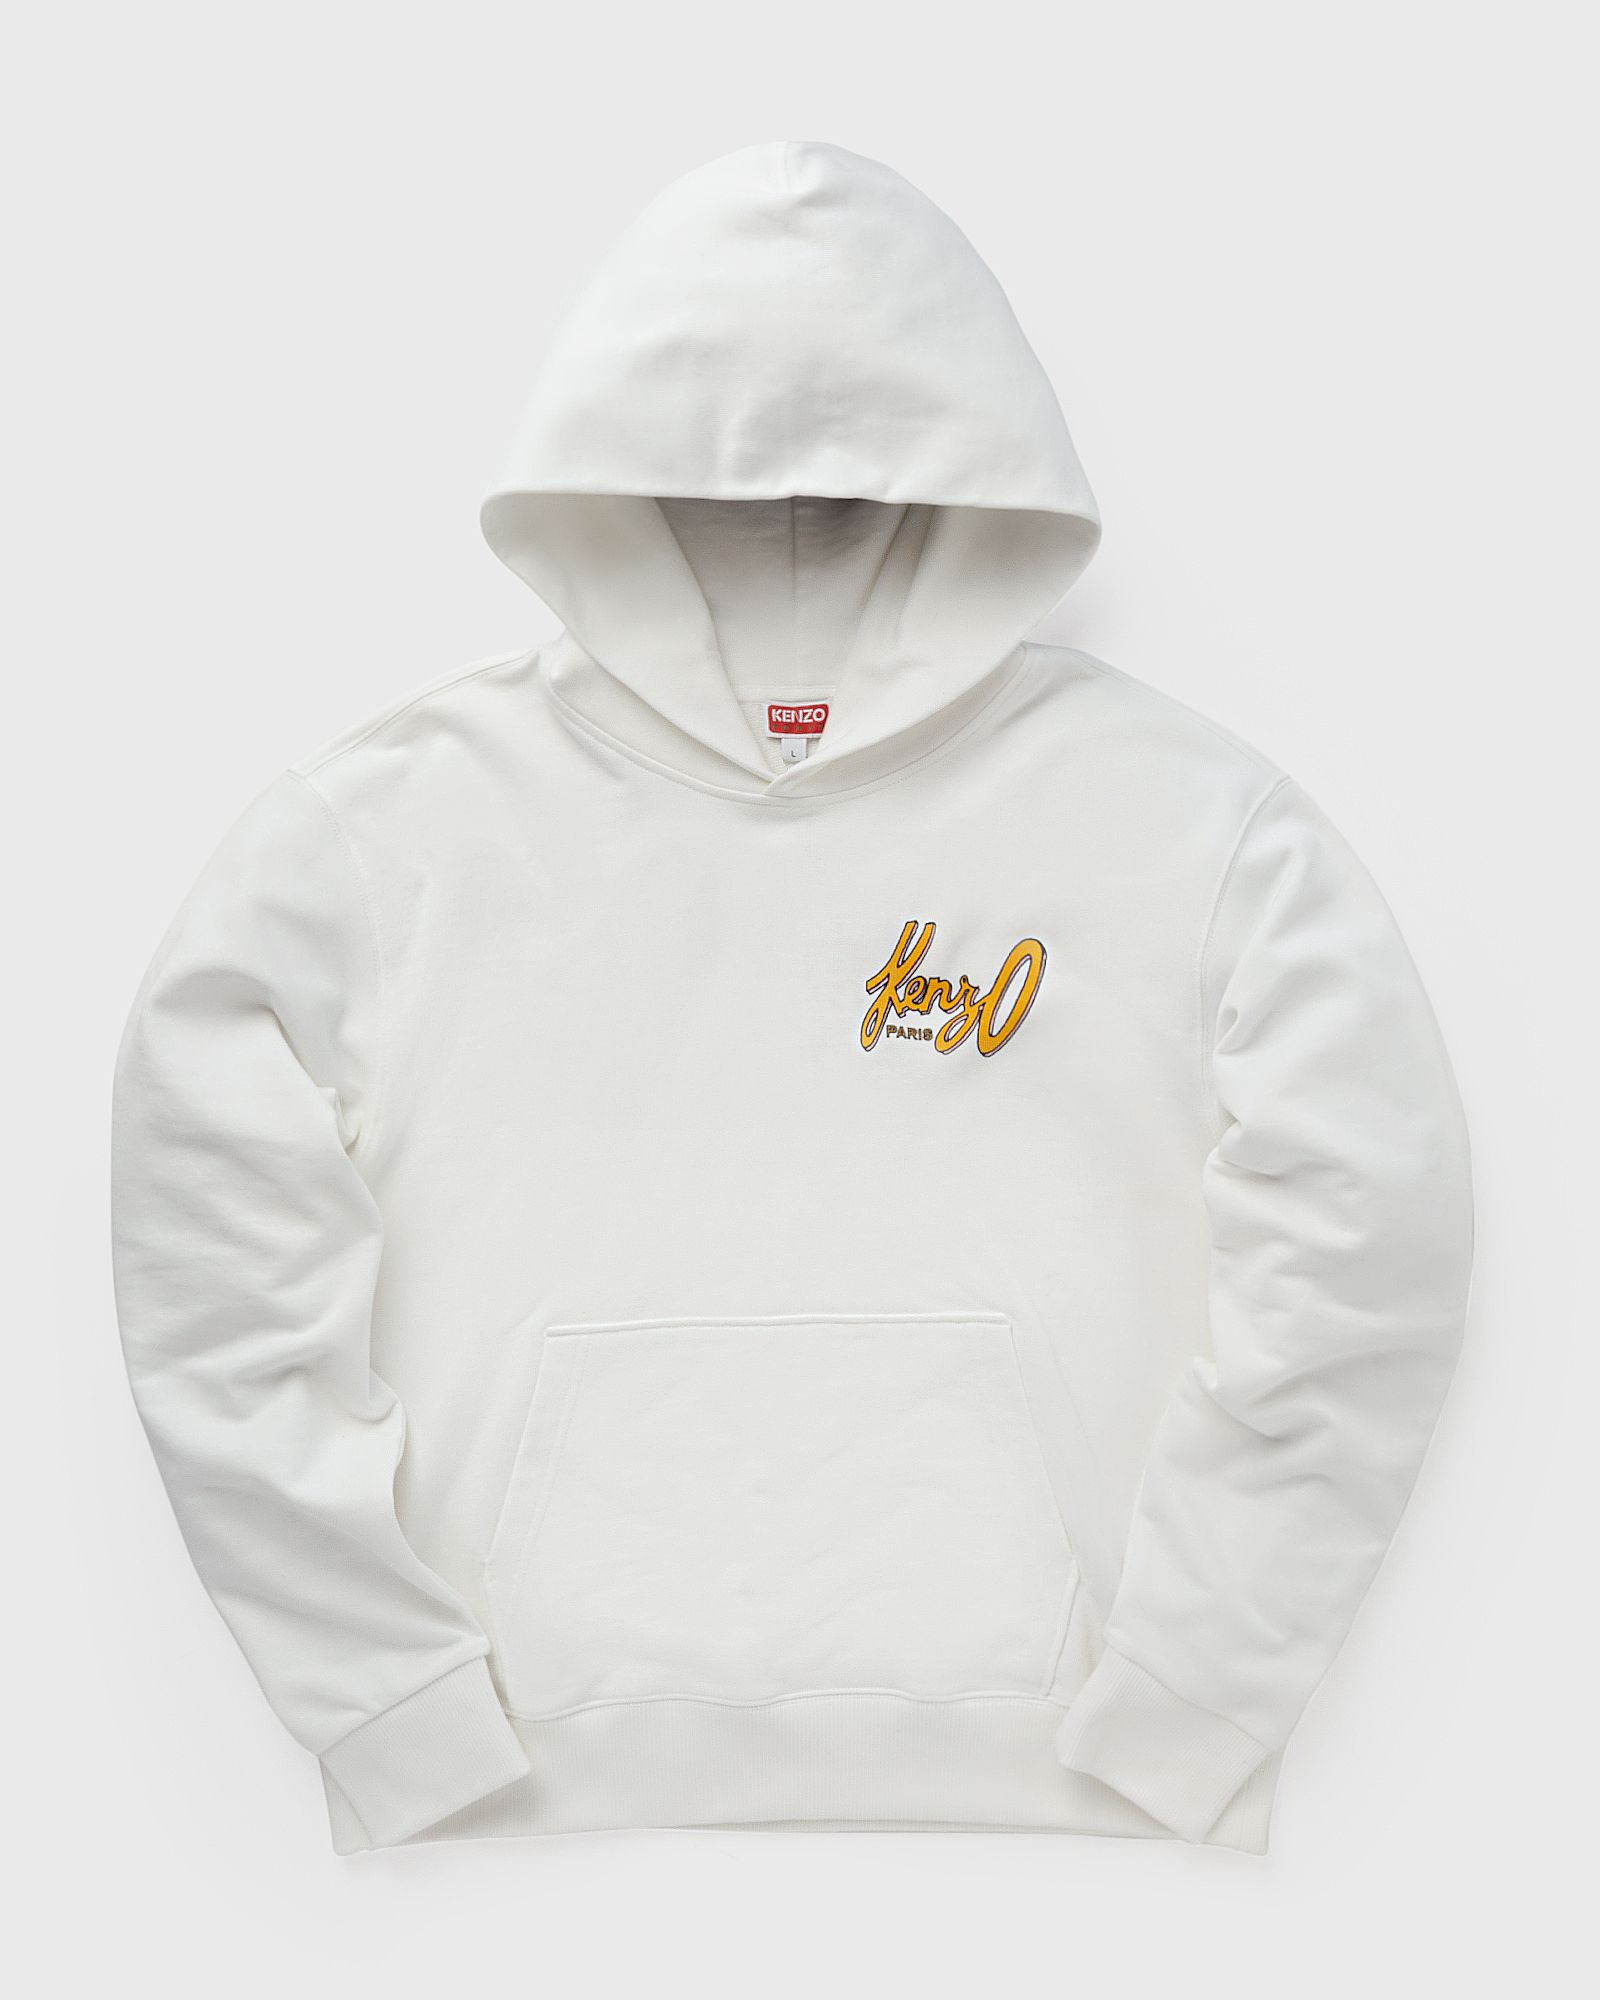 Kenzo - archive logo cl hoodie men hoodies white in größe:xl